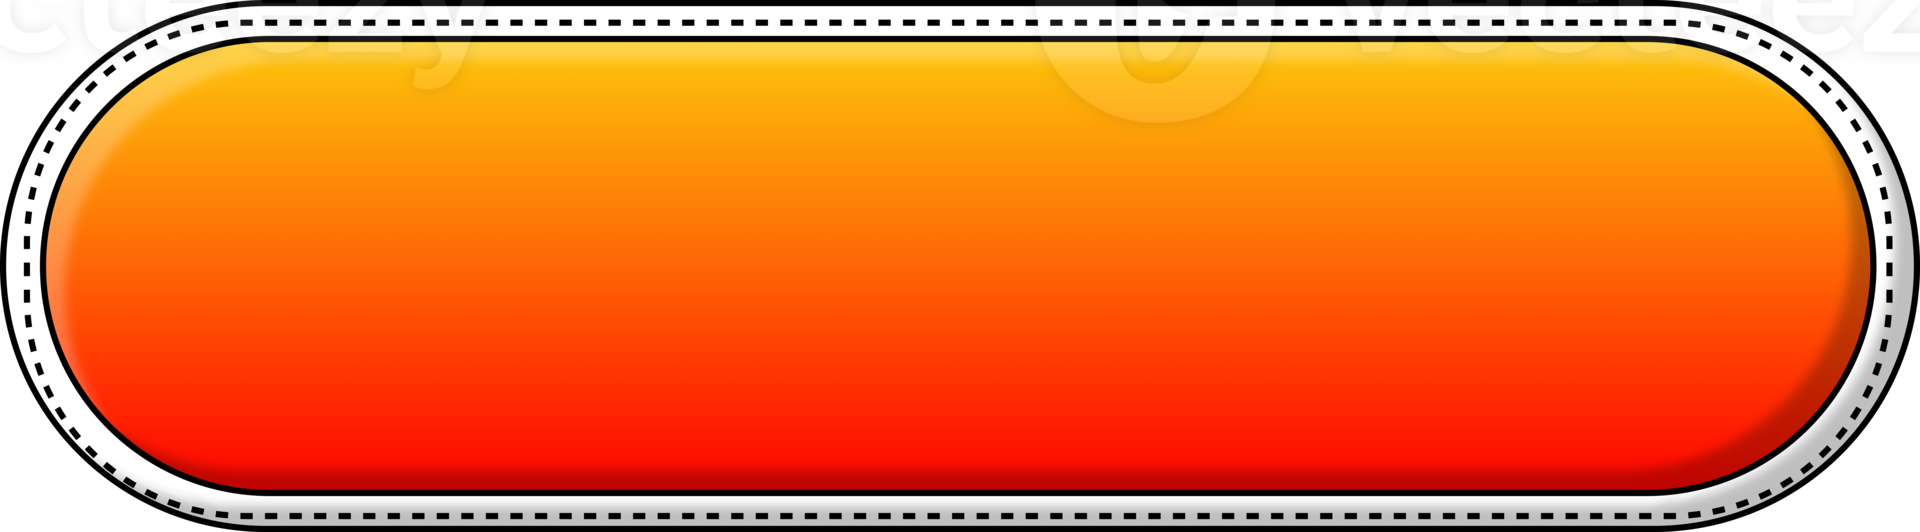 simple square line border dialog title bar design element PNG image with transparent background